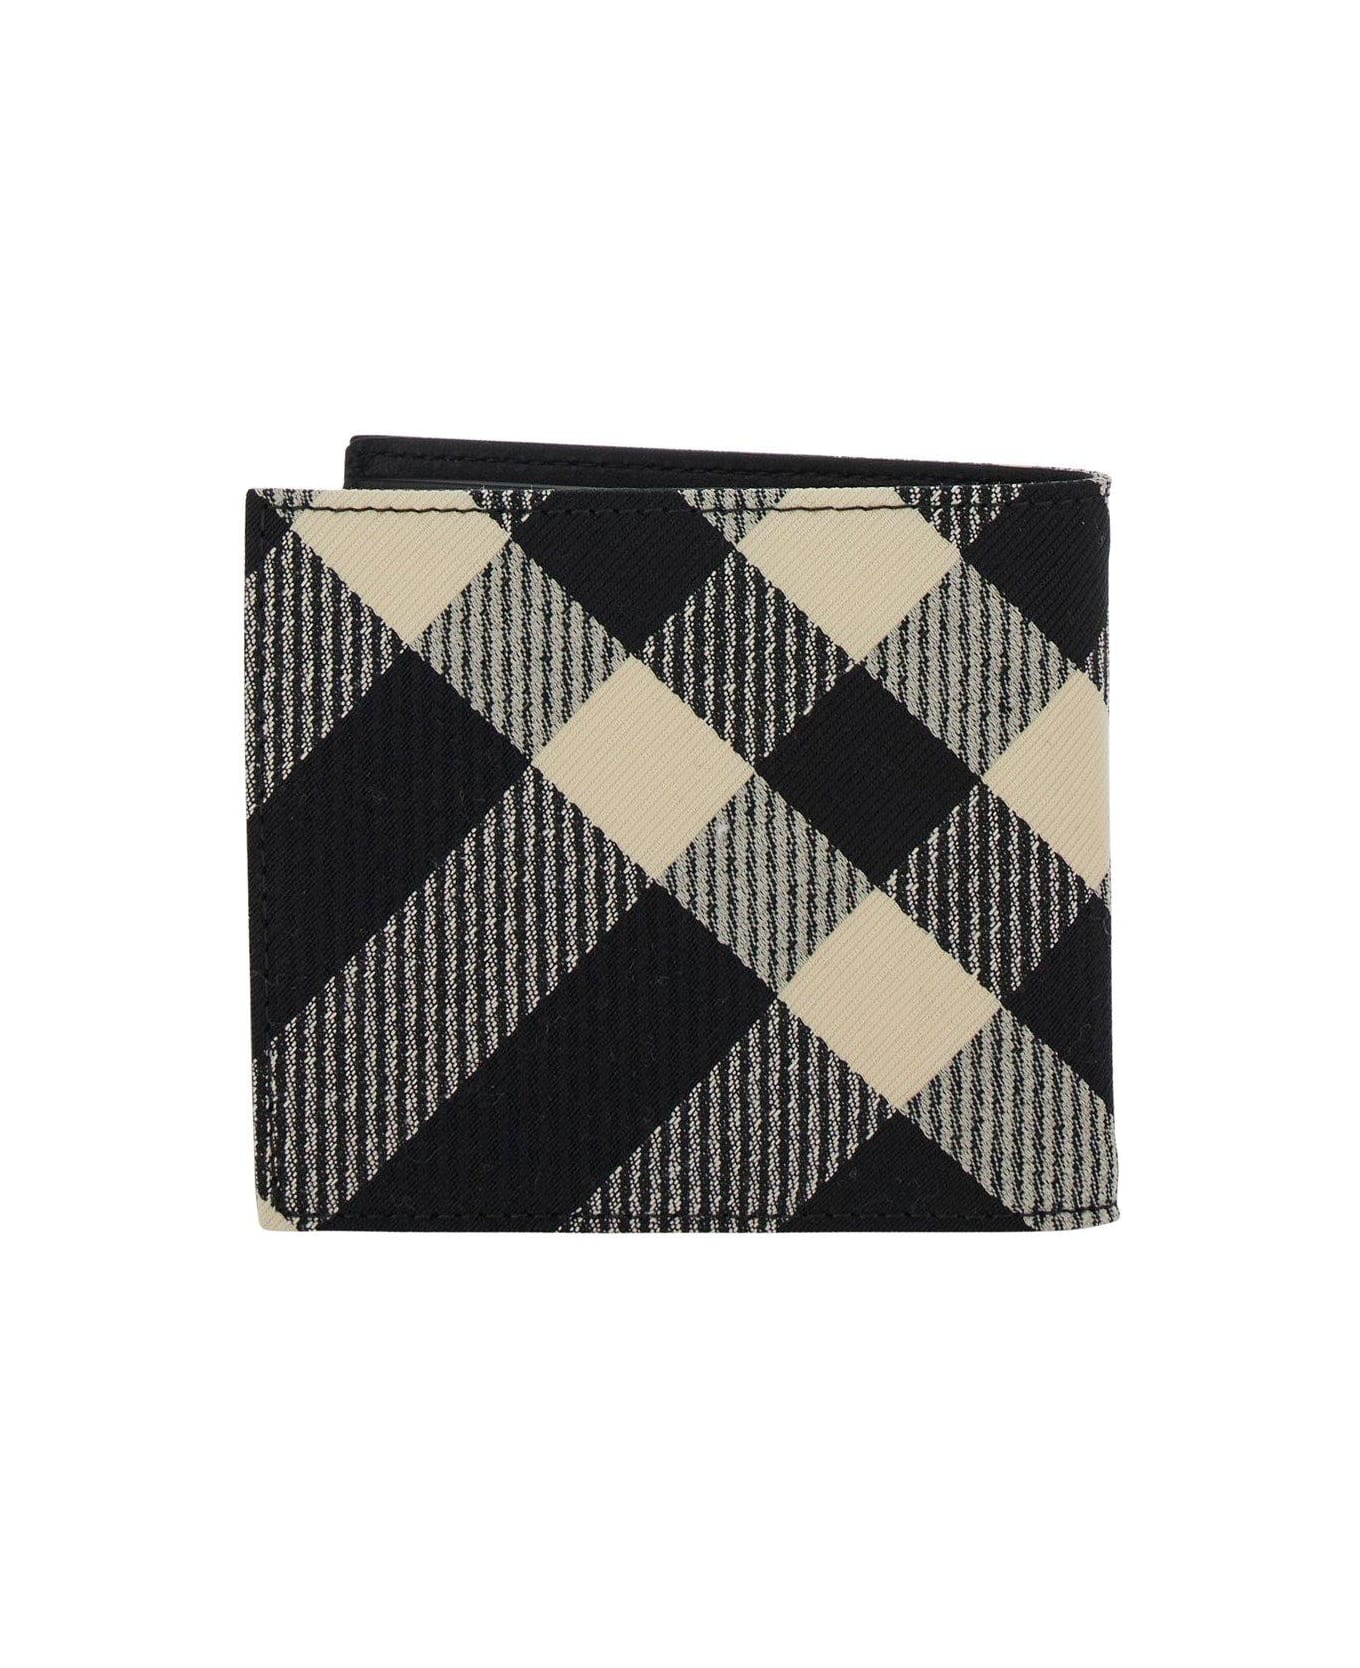 Burberry Check Patterned Bi-fold Wallet - Black calico 財布